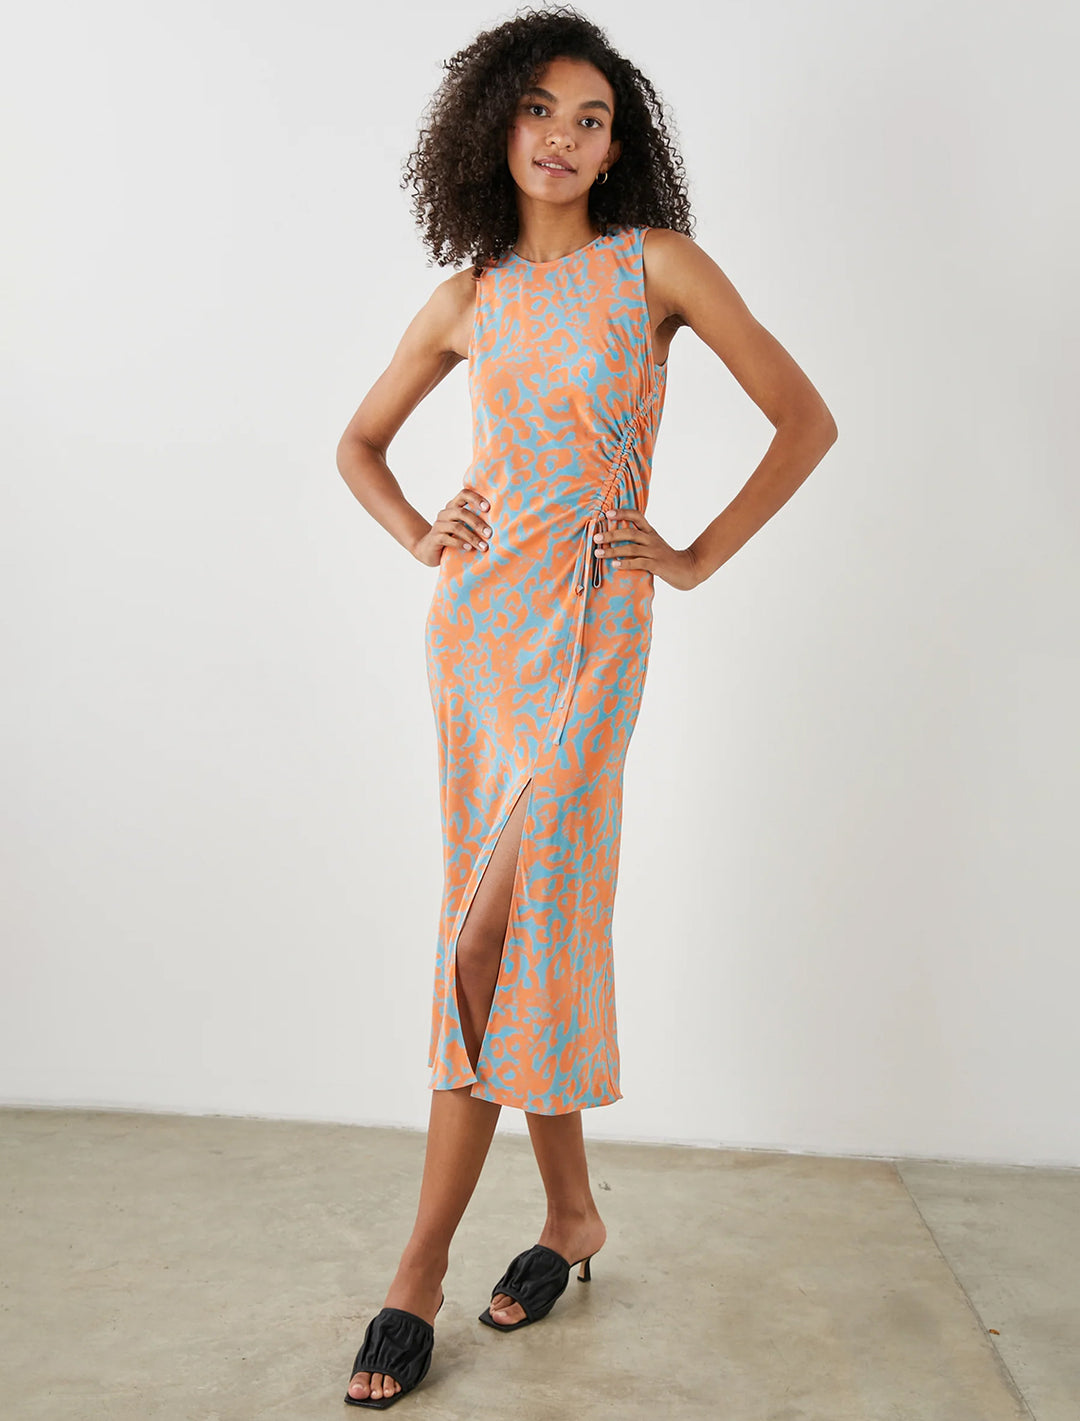 Model wearing Rails' gabriella dress in orange diffused cheetah.